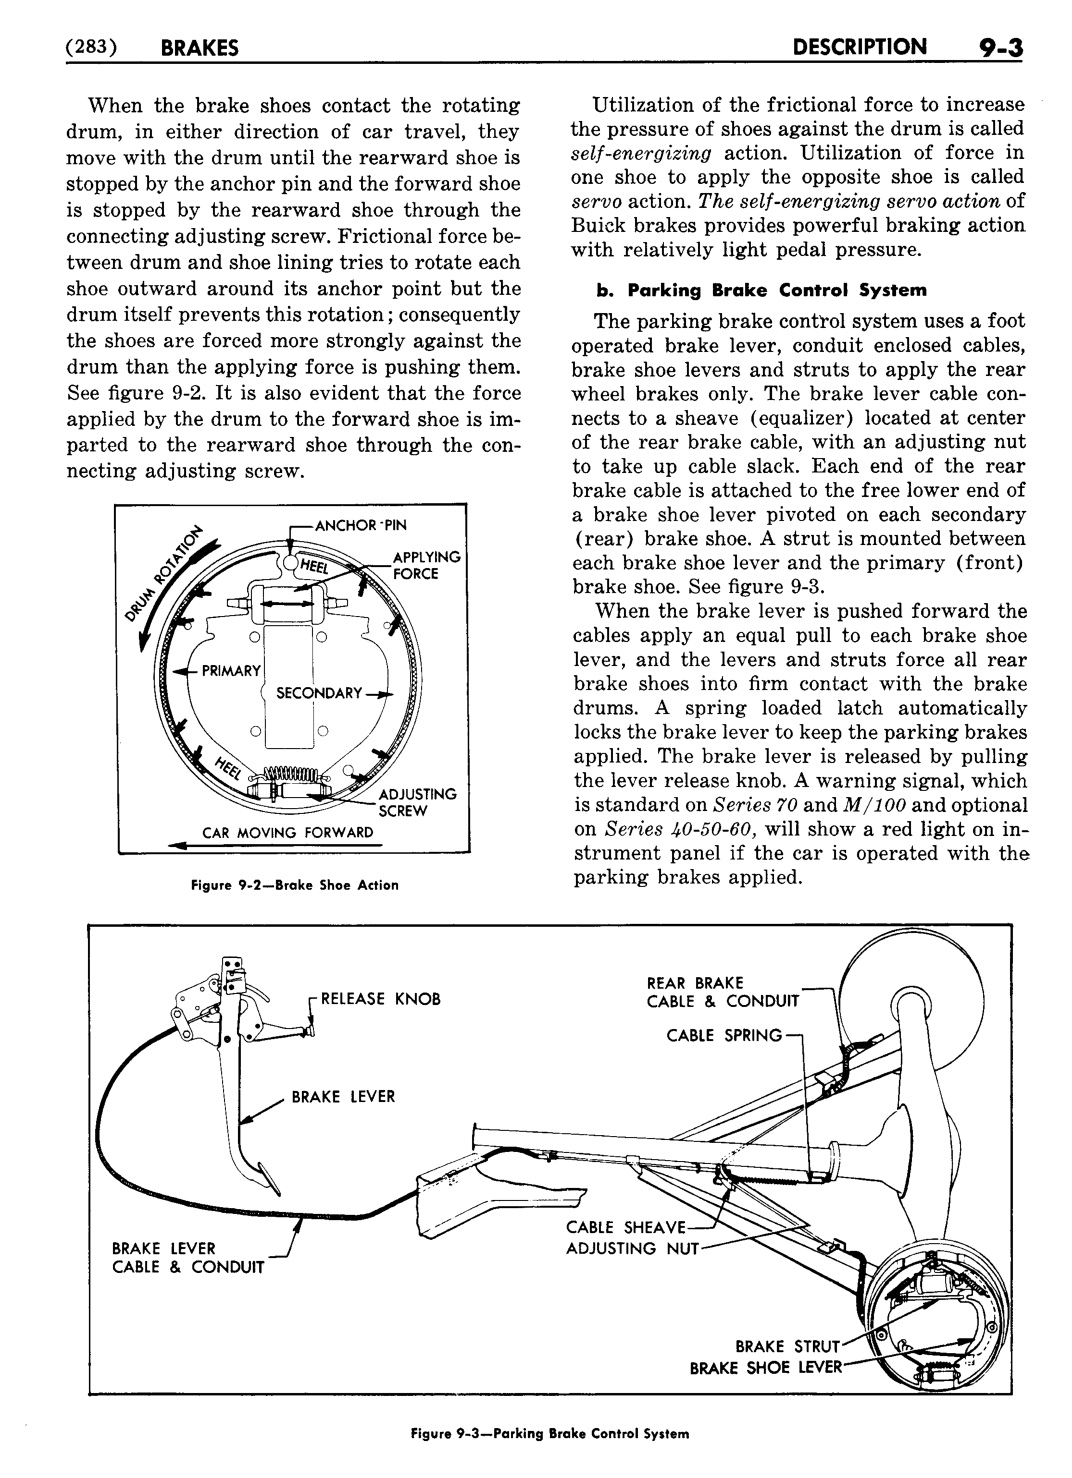 n_10 1954 Buick Shop Manual - Brakes-003-003.jpg